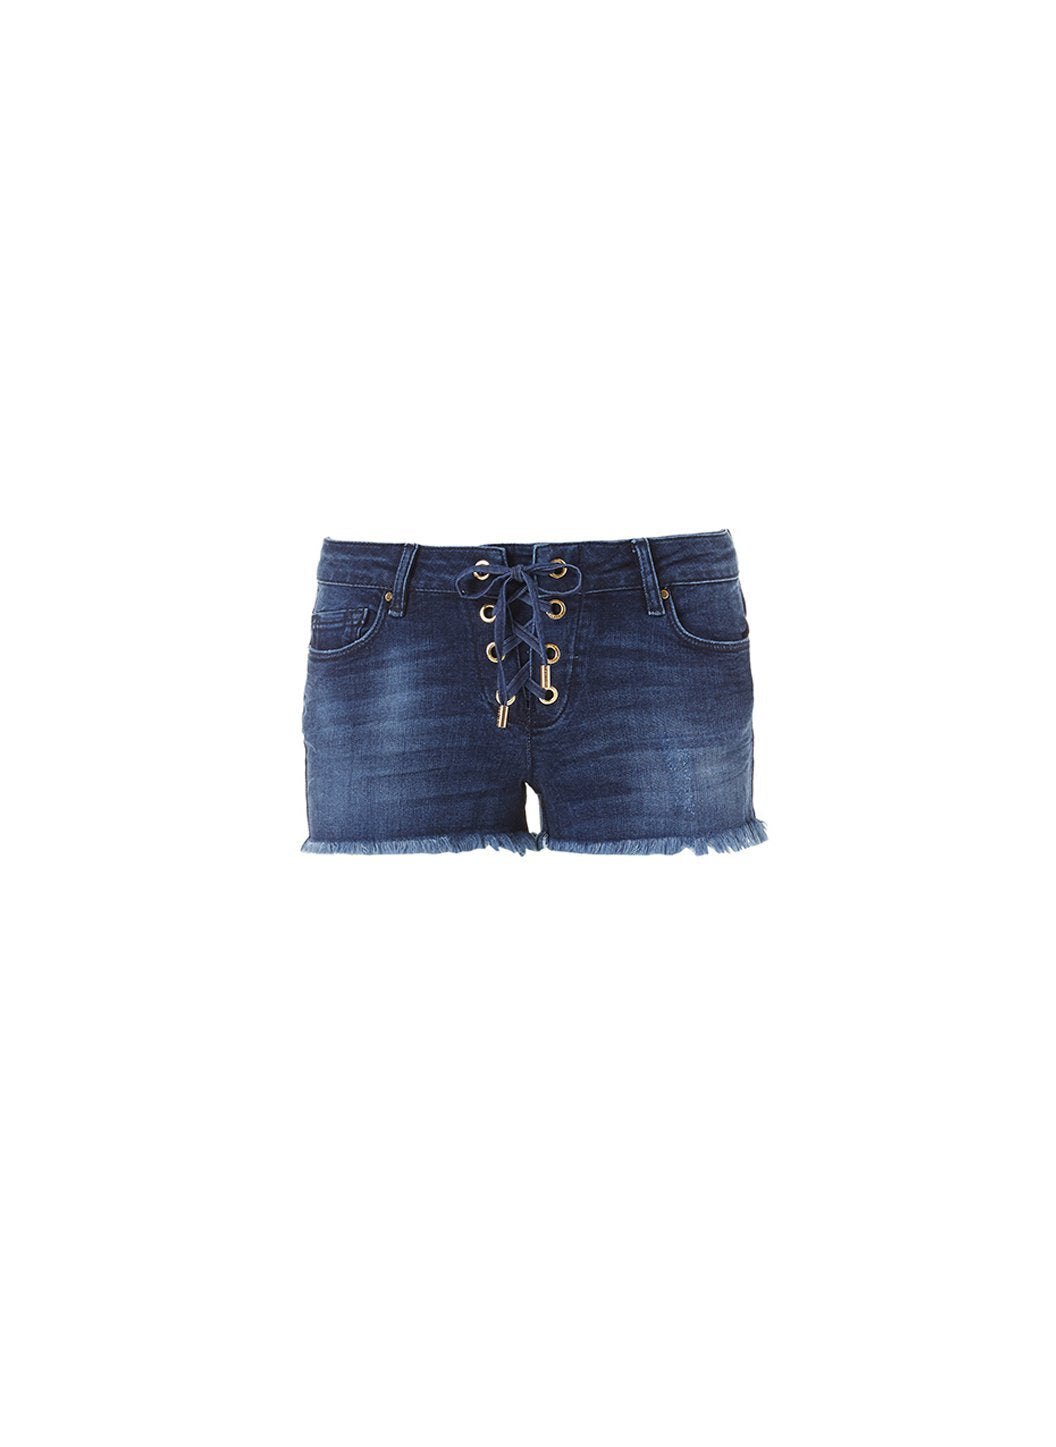 Lace Up Jeans Shorts Sexy Women High Street Blue Elegant Casual Denim Short  Pants - AliExpress